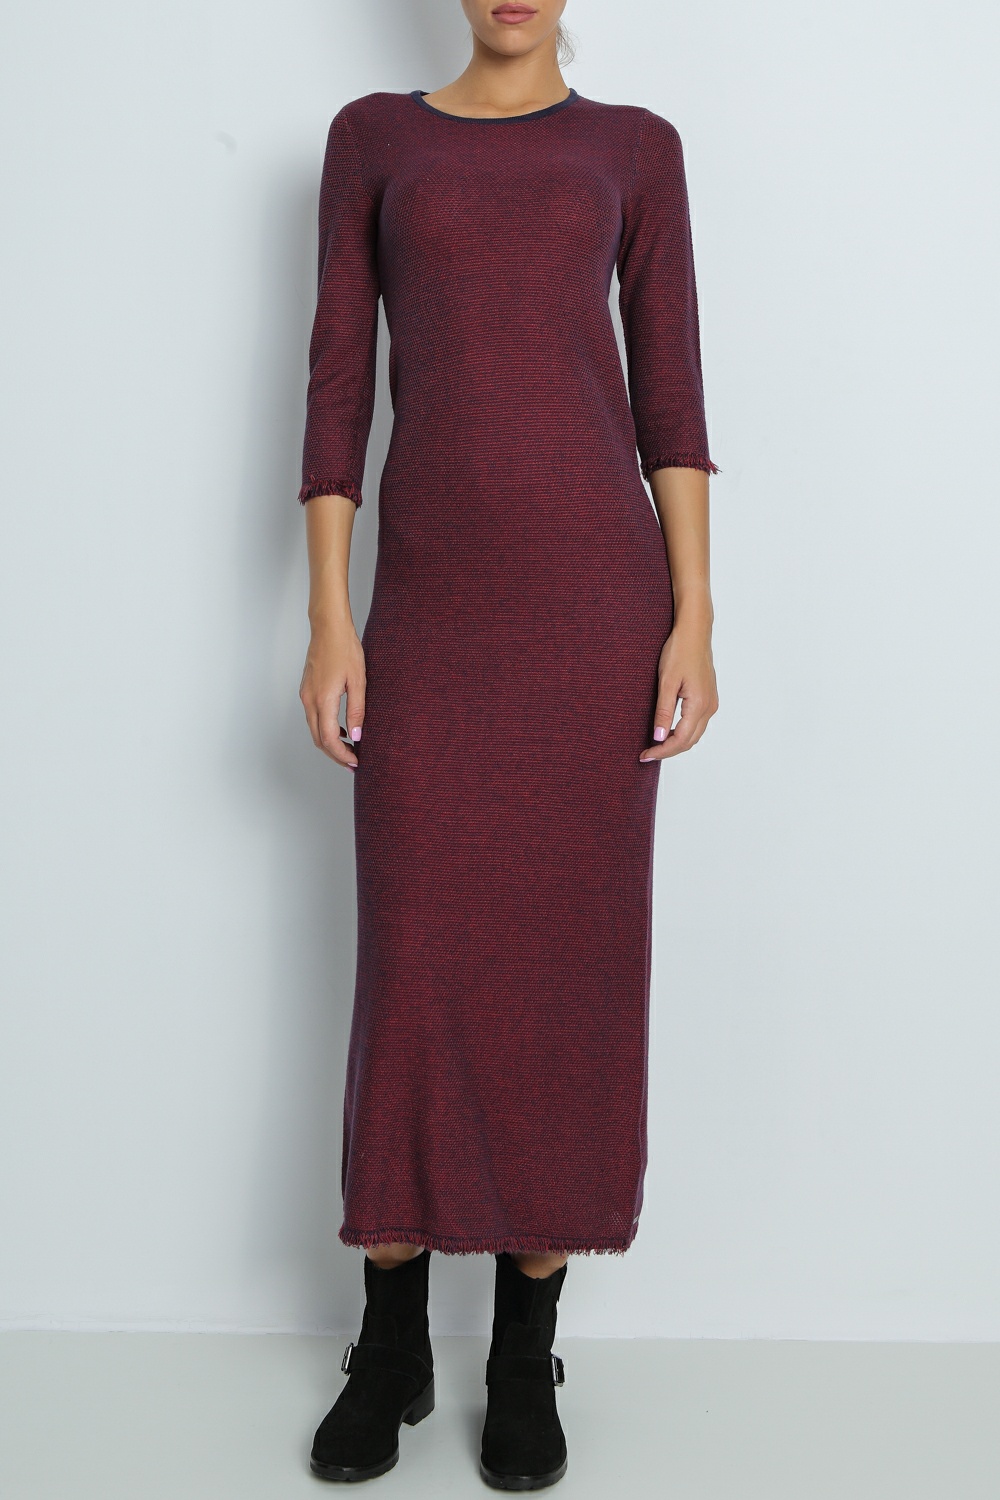 BOSS – Γυναικείο φόρεμα BOSS Iolana μπορντό 1618981.0-0102